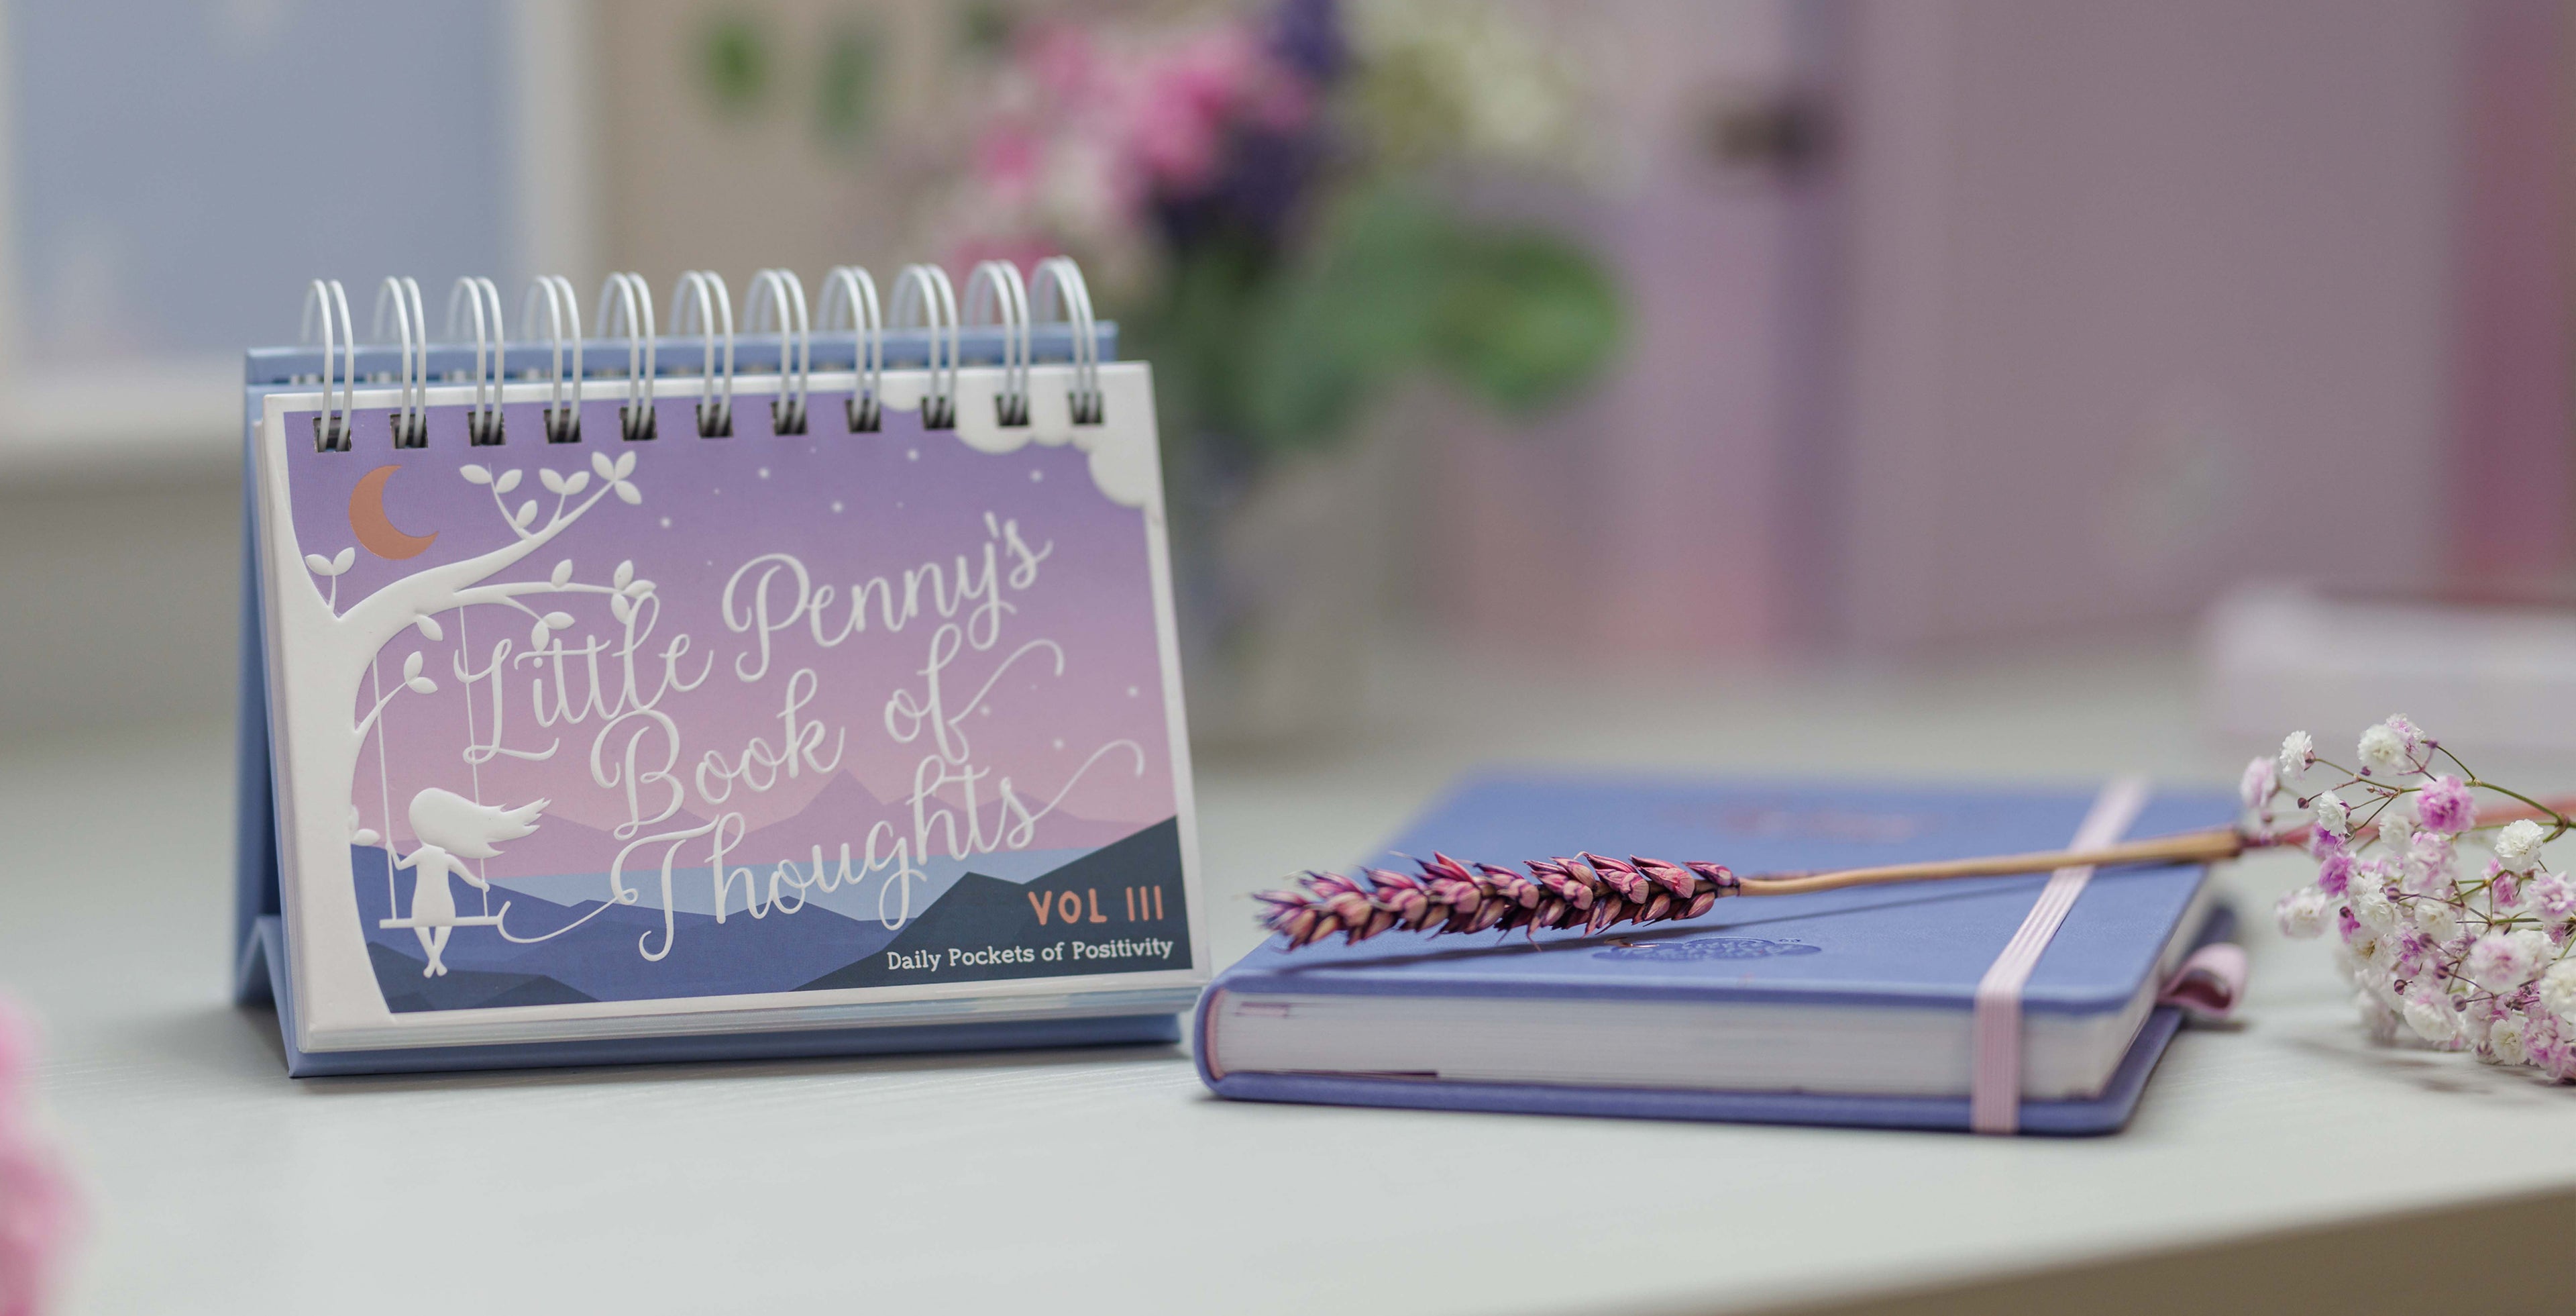 Light Pink Journal Set, Set of 3 Sizes, Office + Stationery